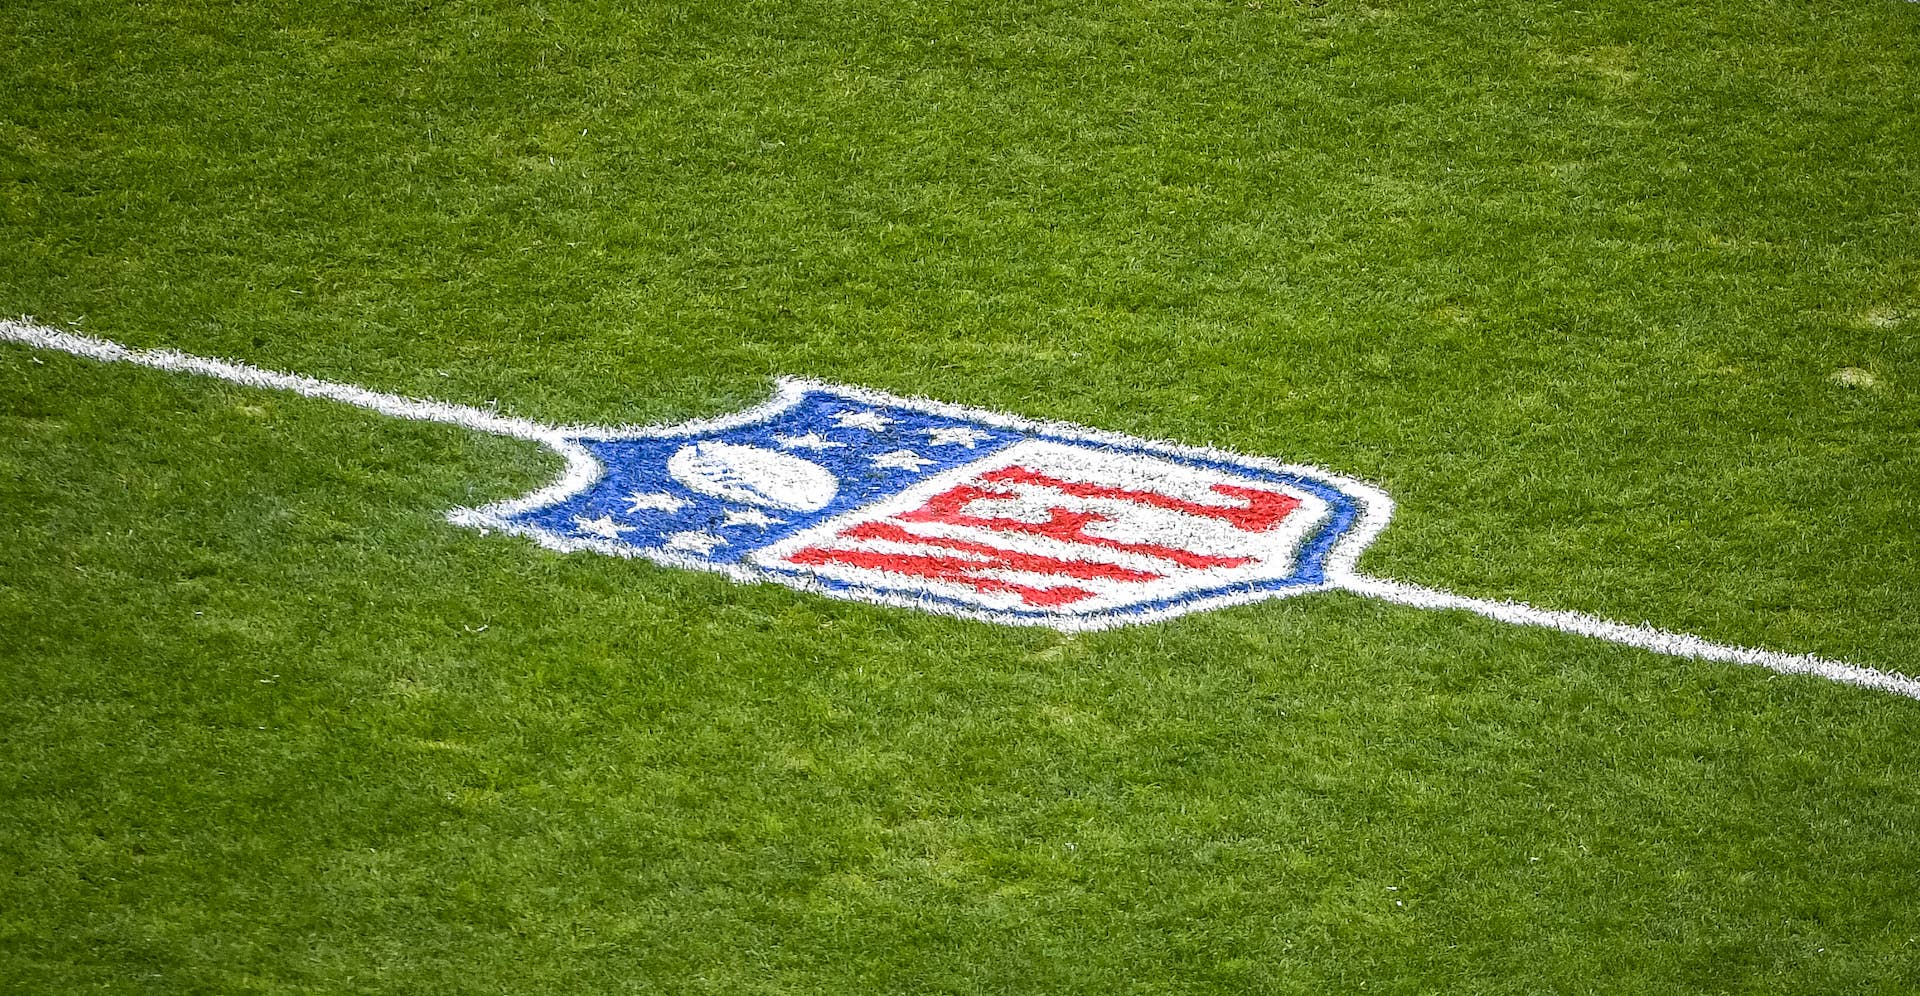 NFL logo at 50 yard line